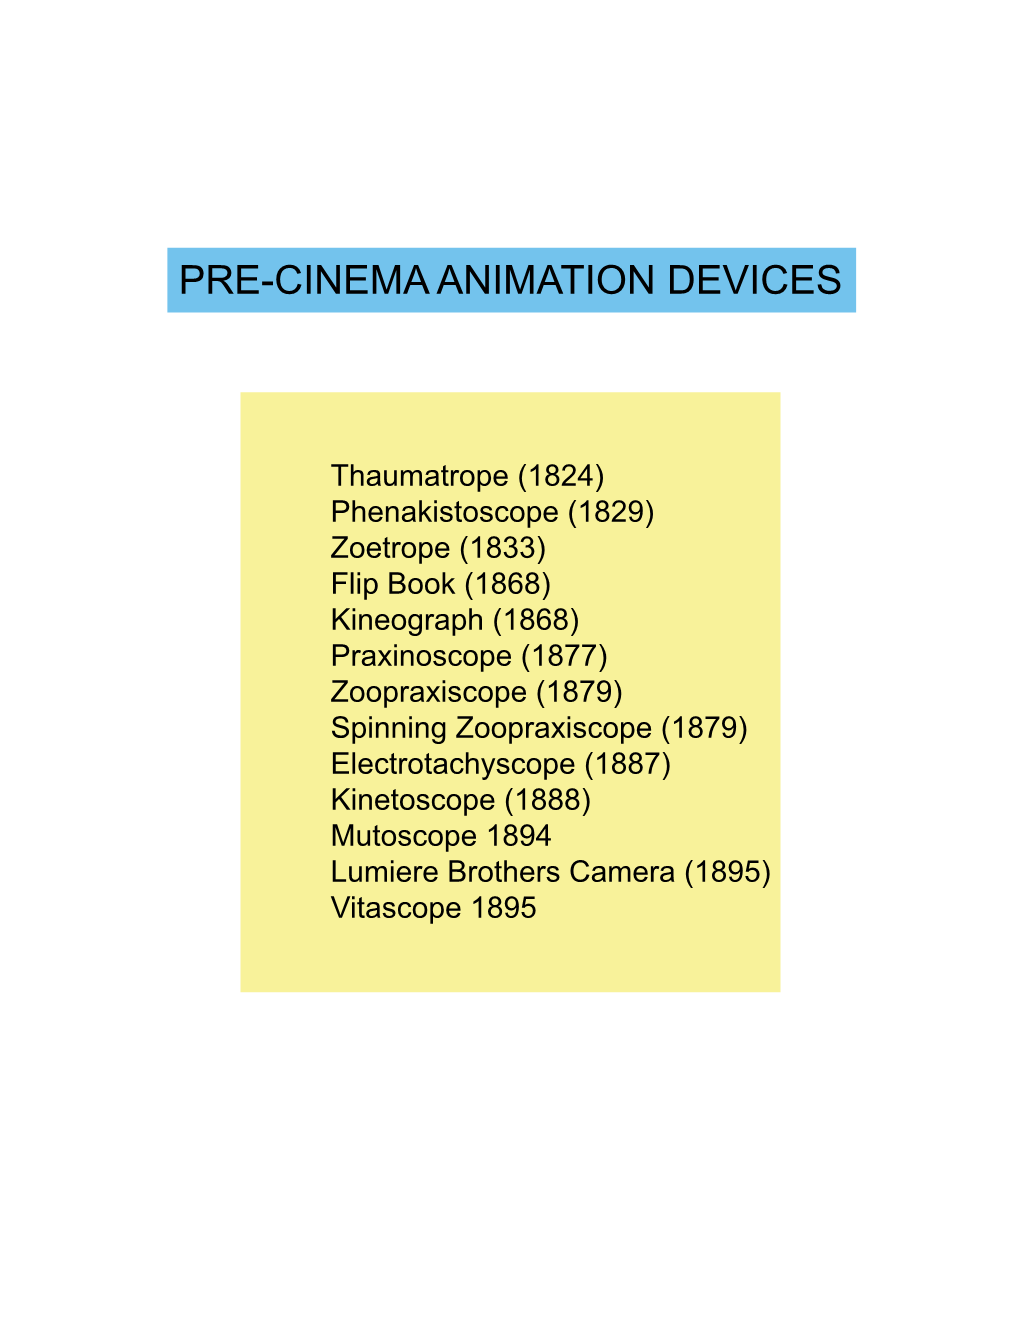 Pre-Cinema Animation Devices